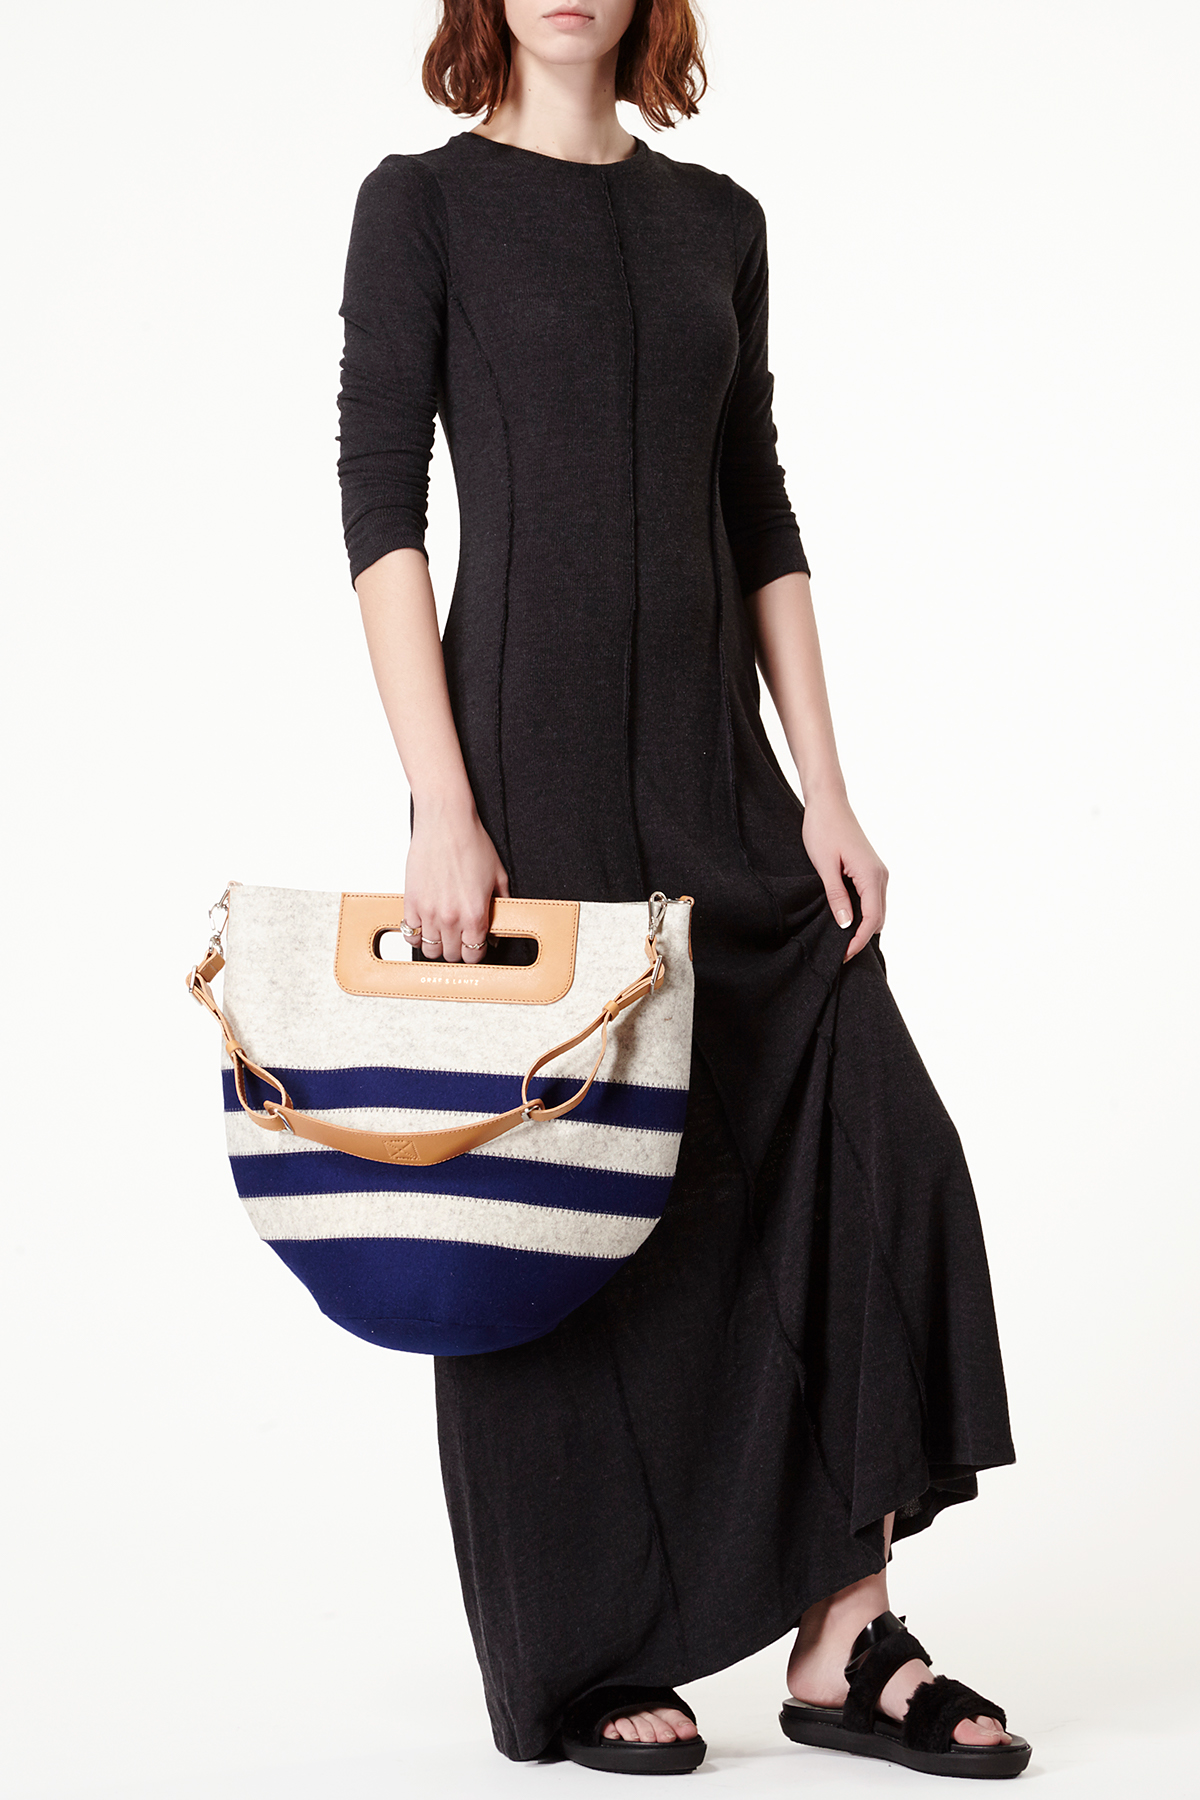 styling  design accessories handbags eComerce